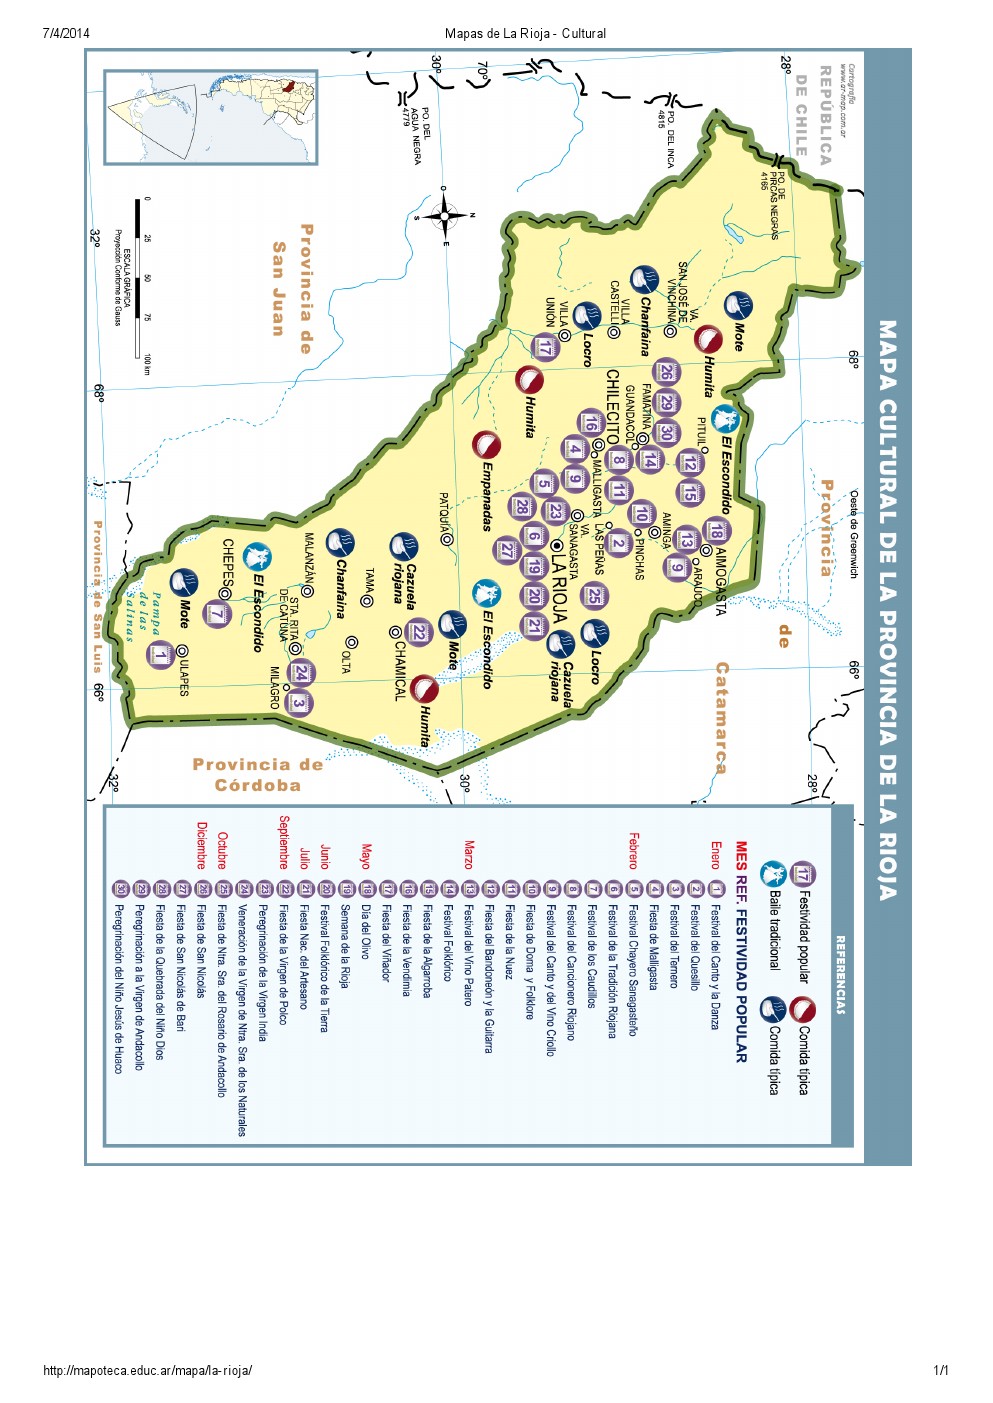 Mapa cultural de La Rioja. Mapoteca de Educ.ar